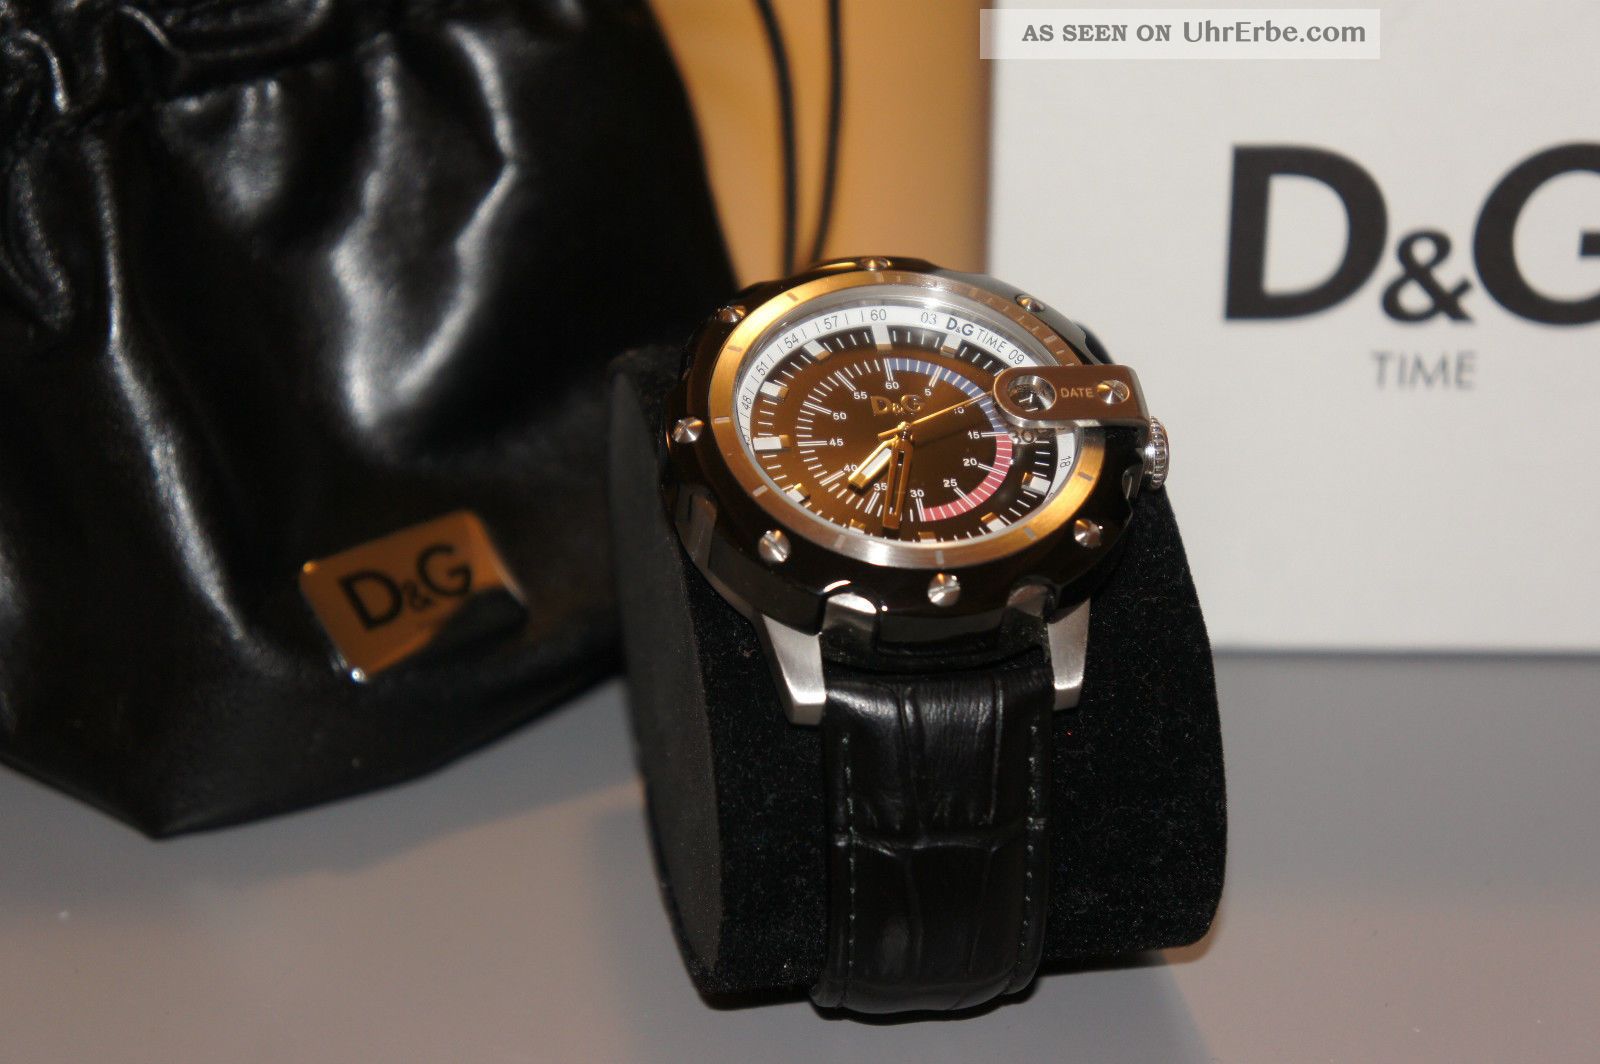 D & G Time Armbanduhr Herren Dolce Gabbana